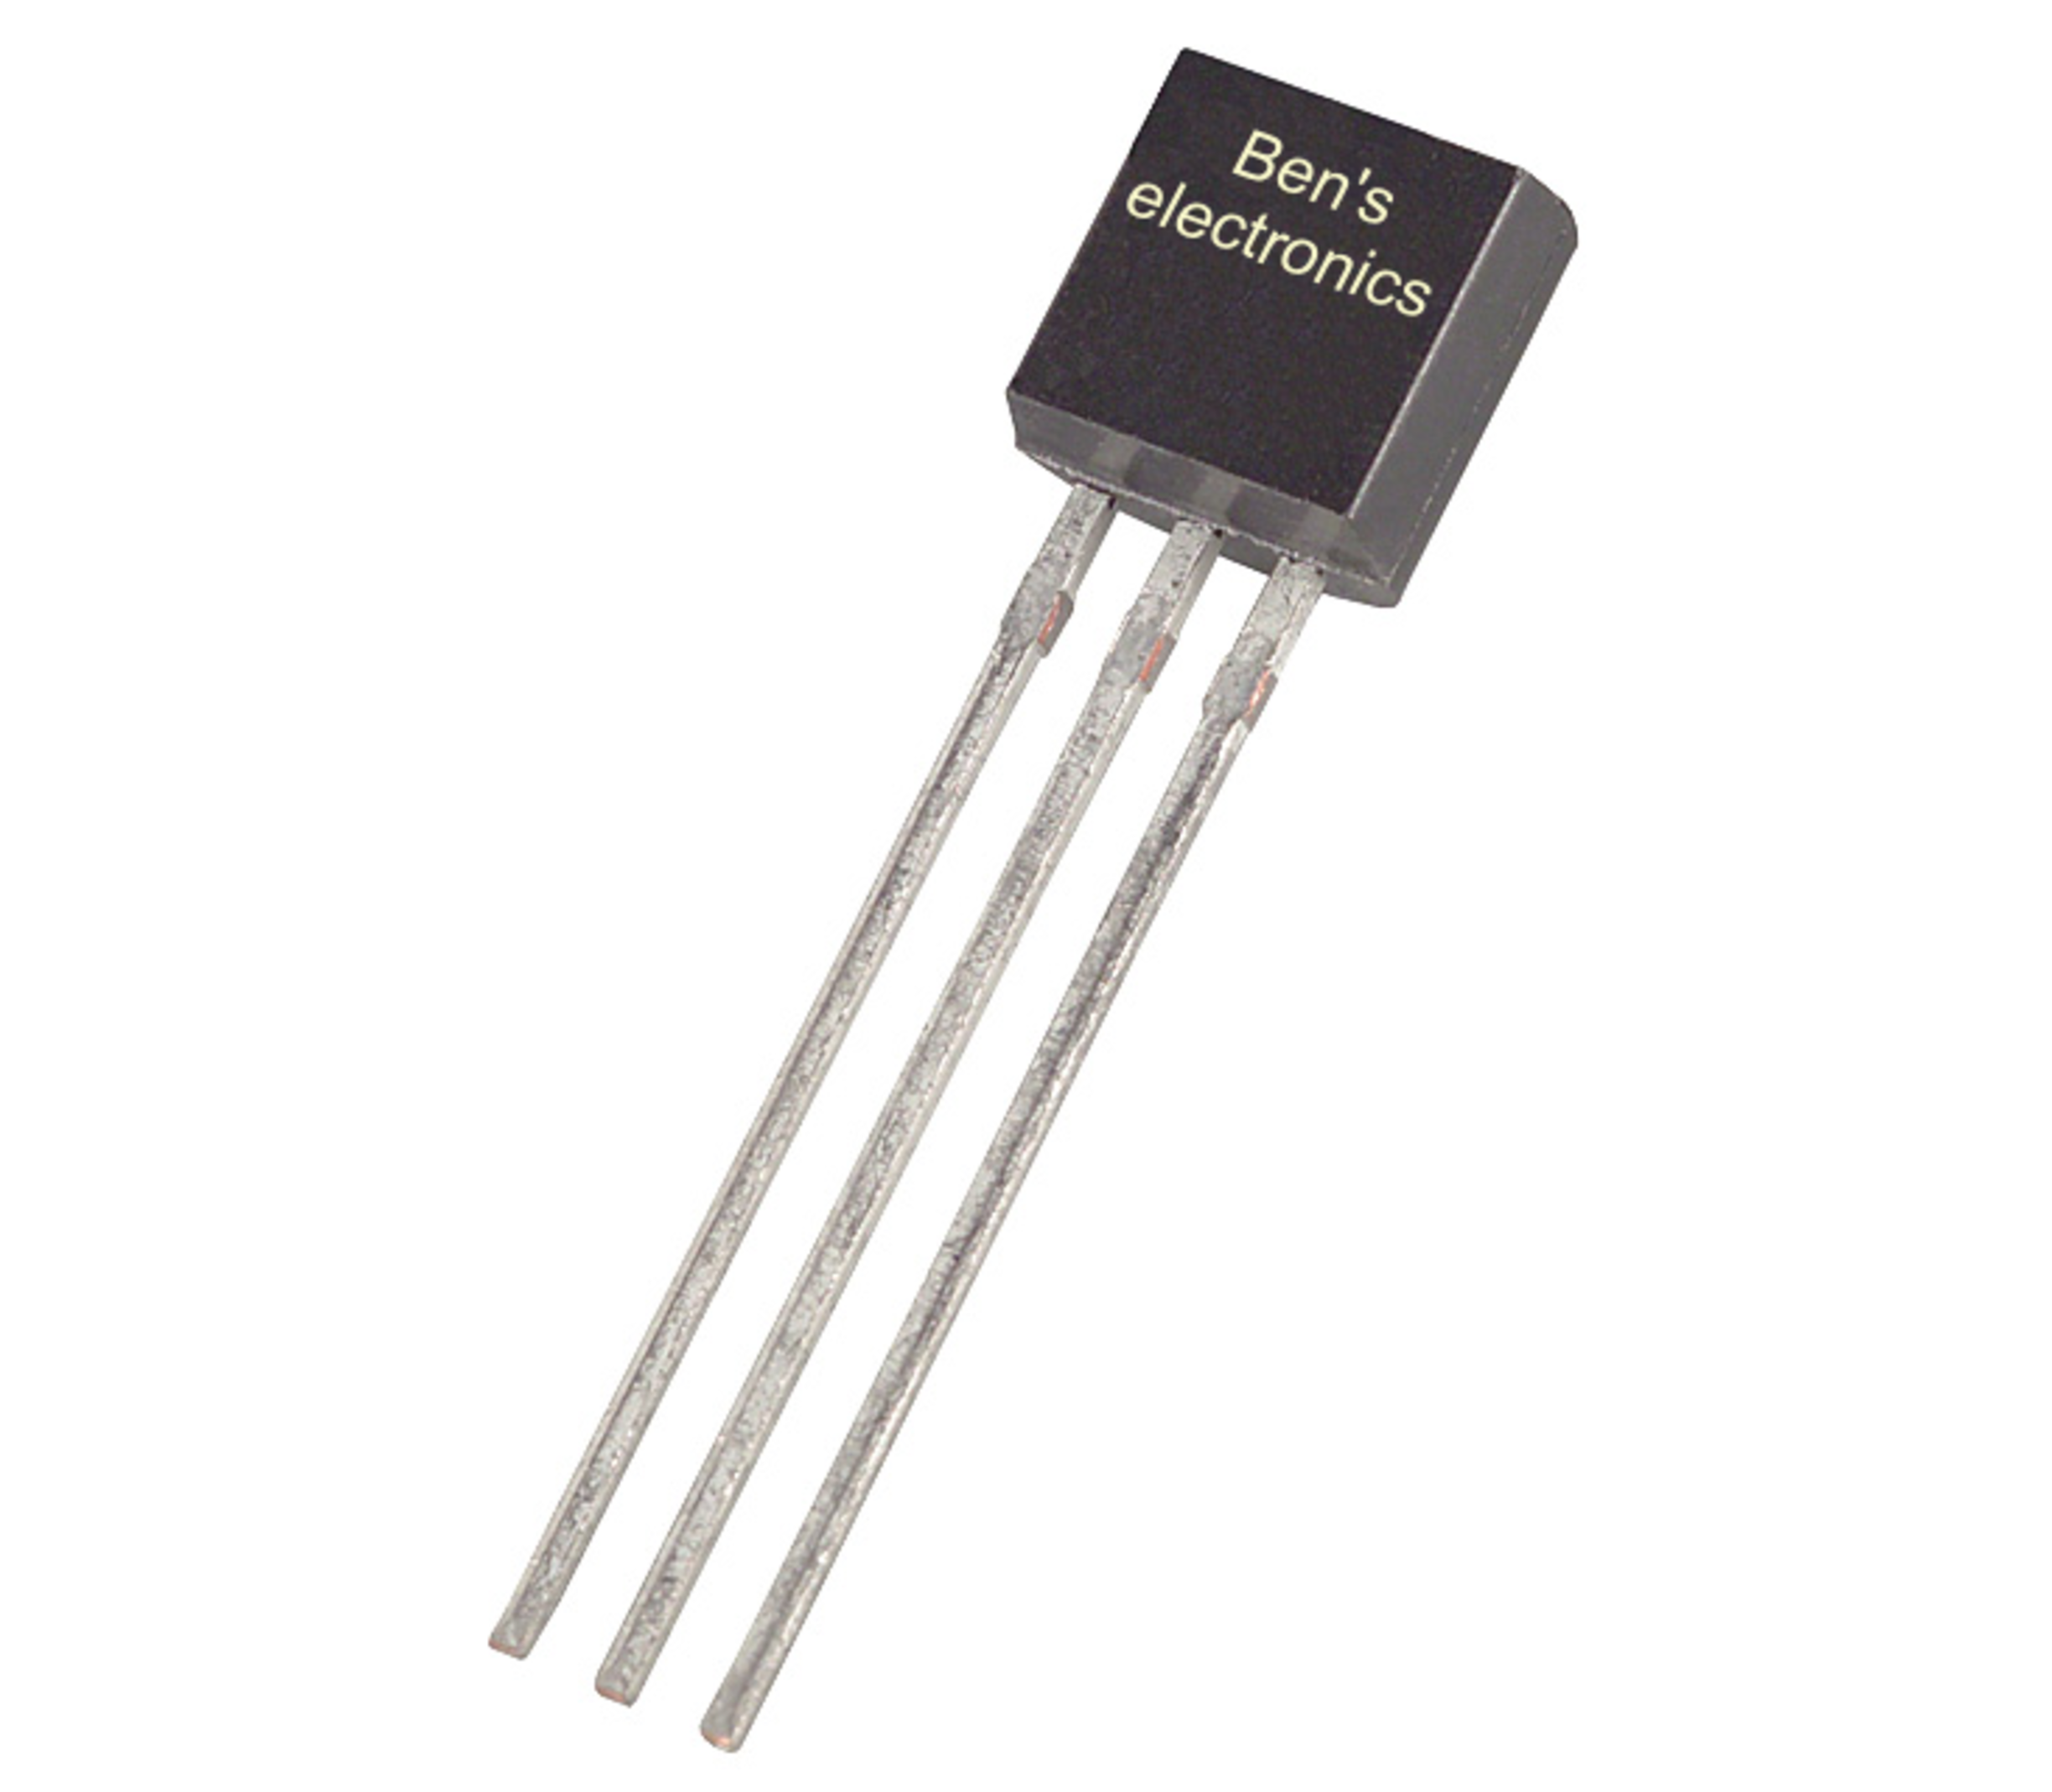 2N3906 transistor